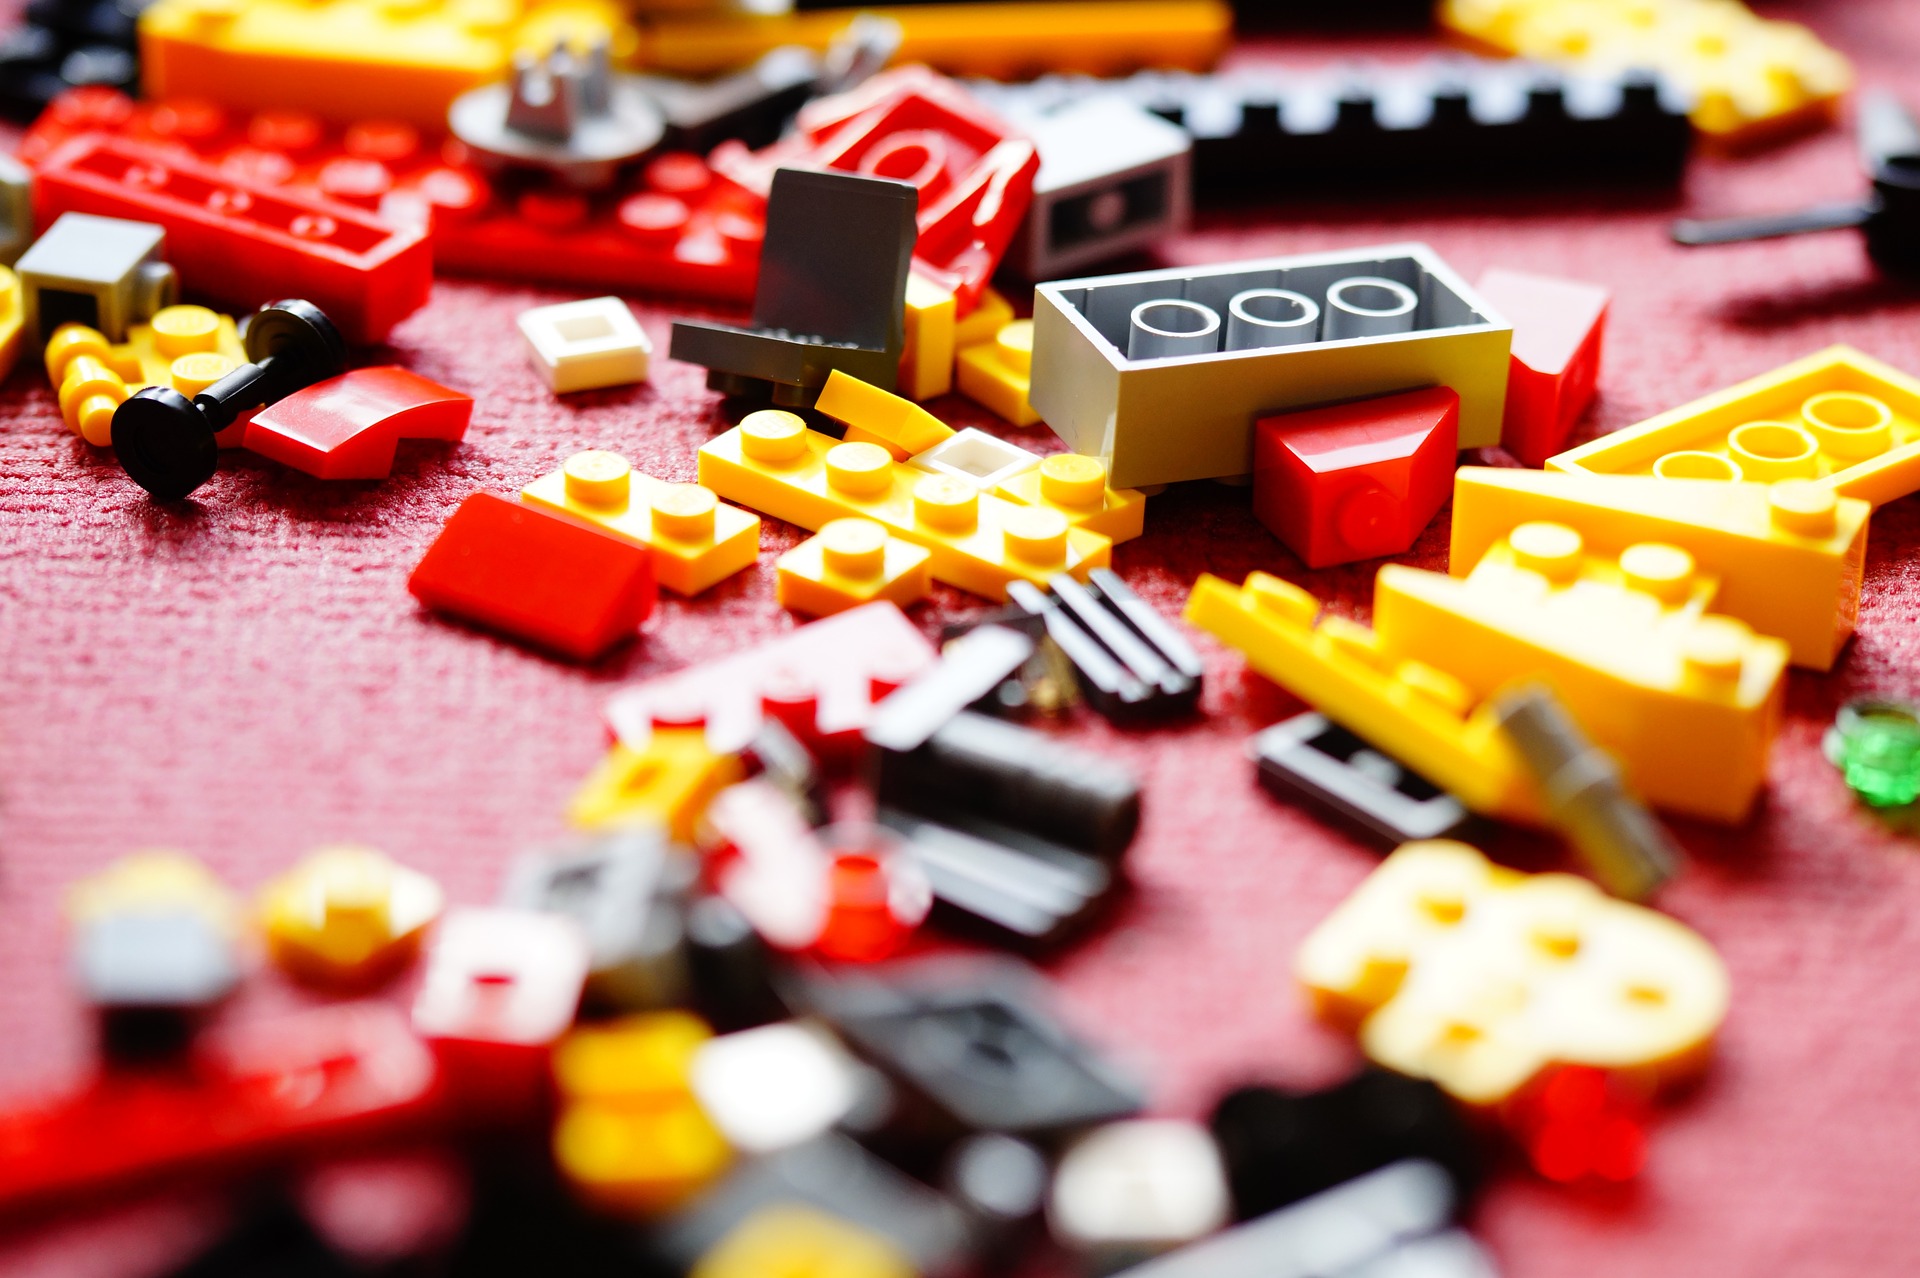 LEGO bricks